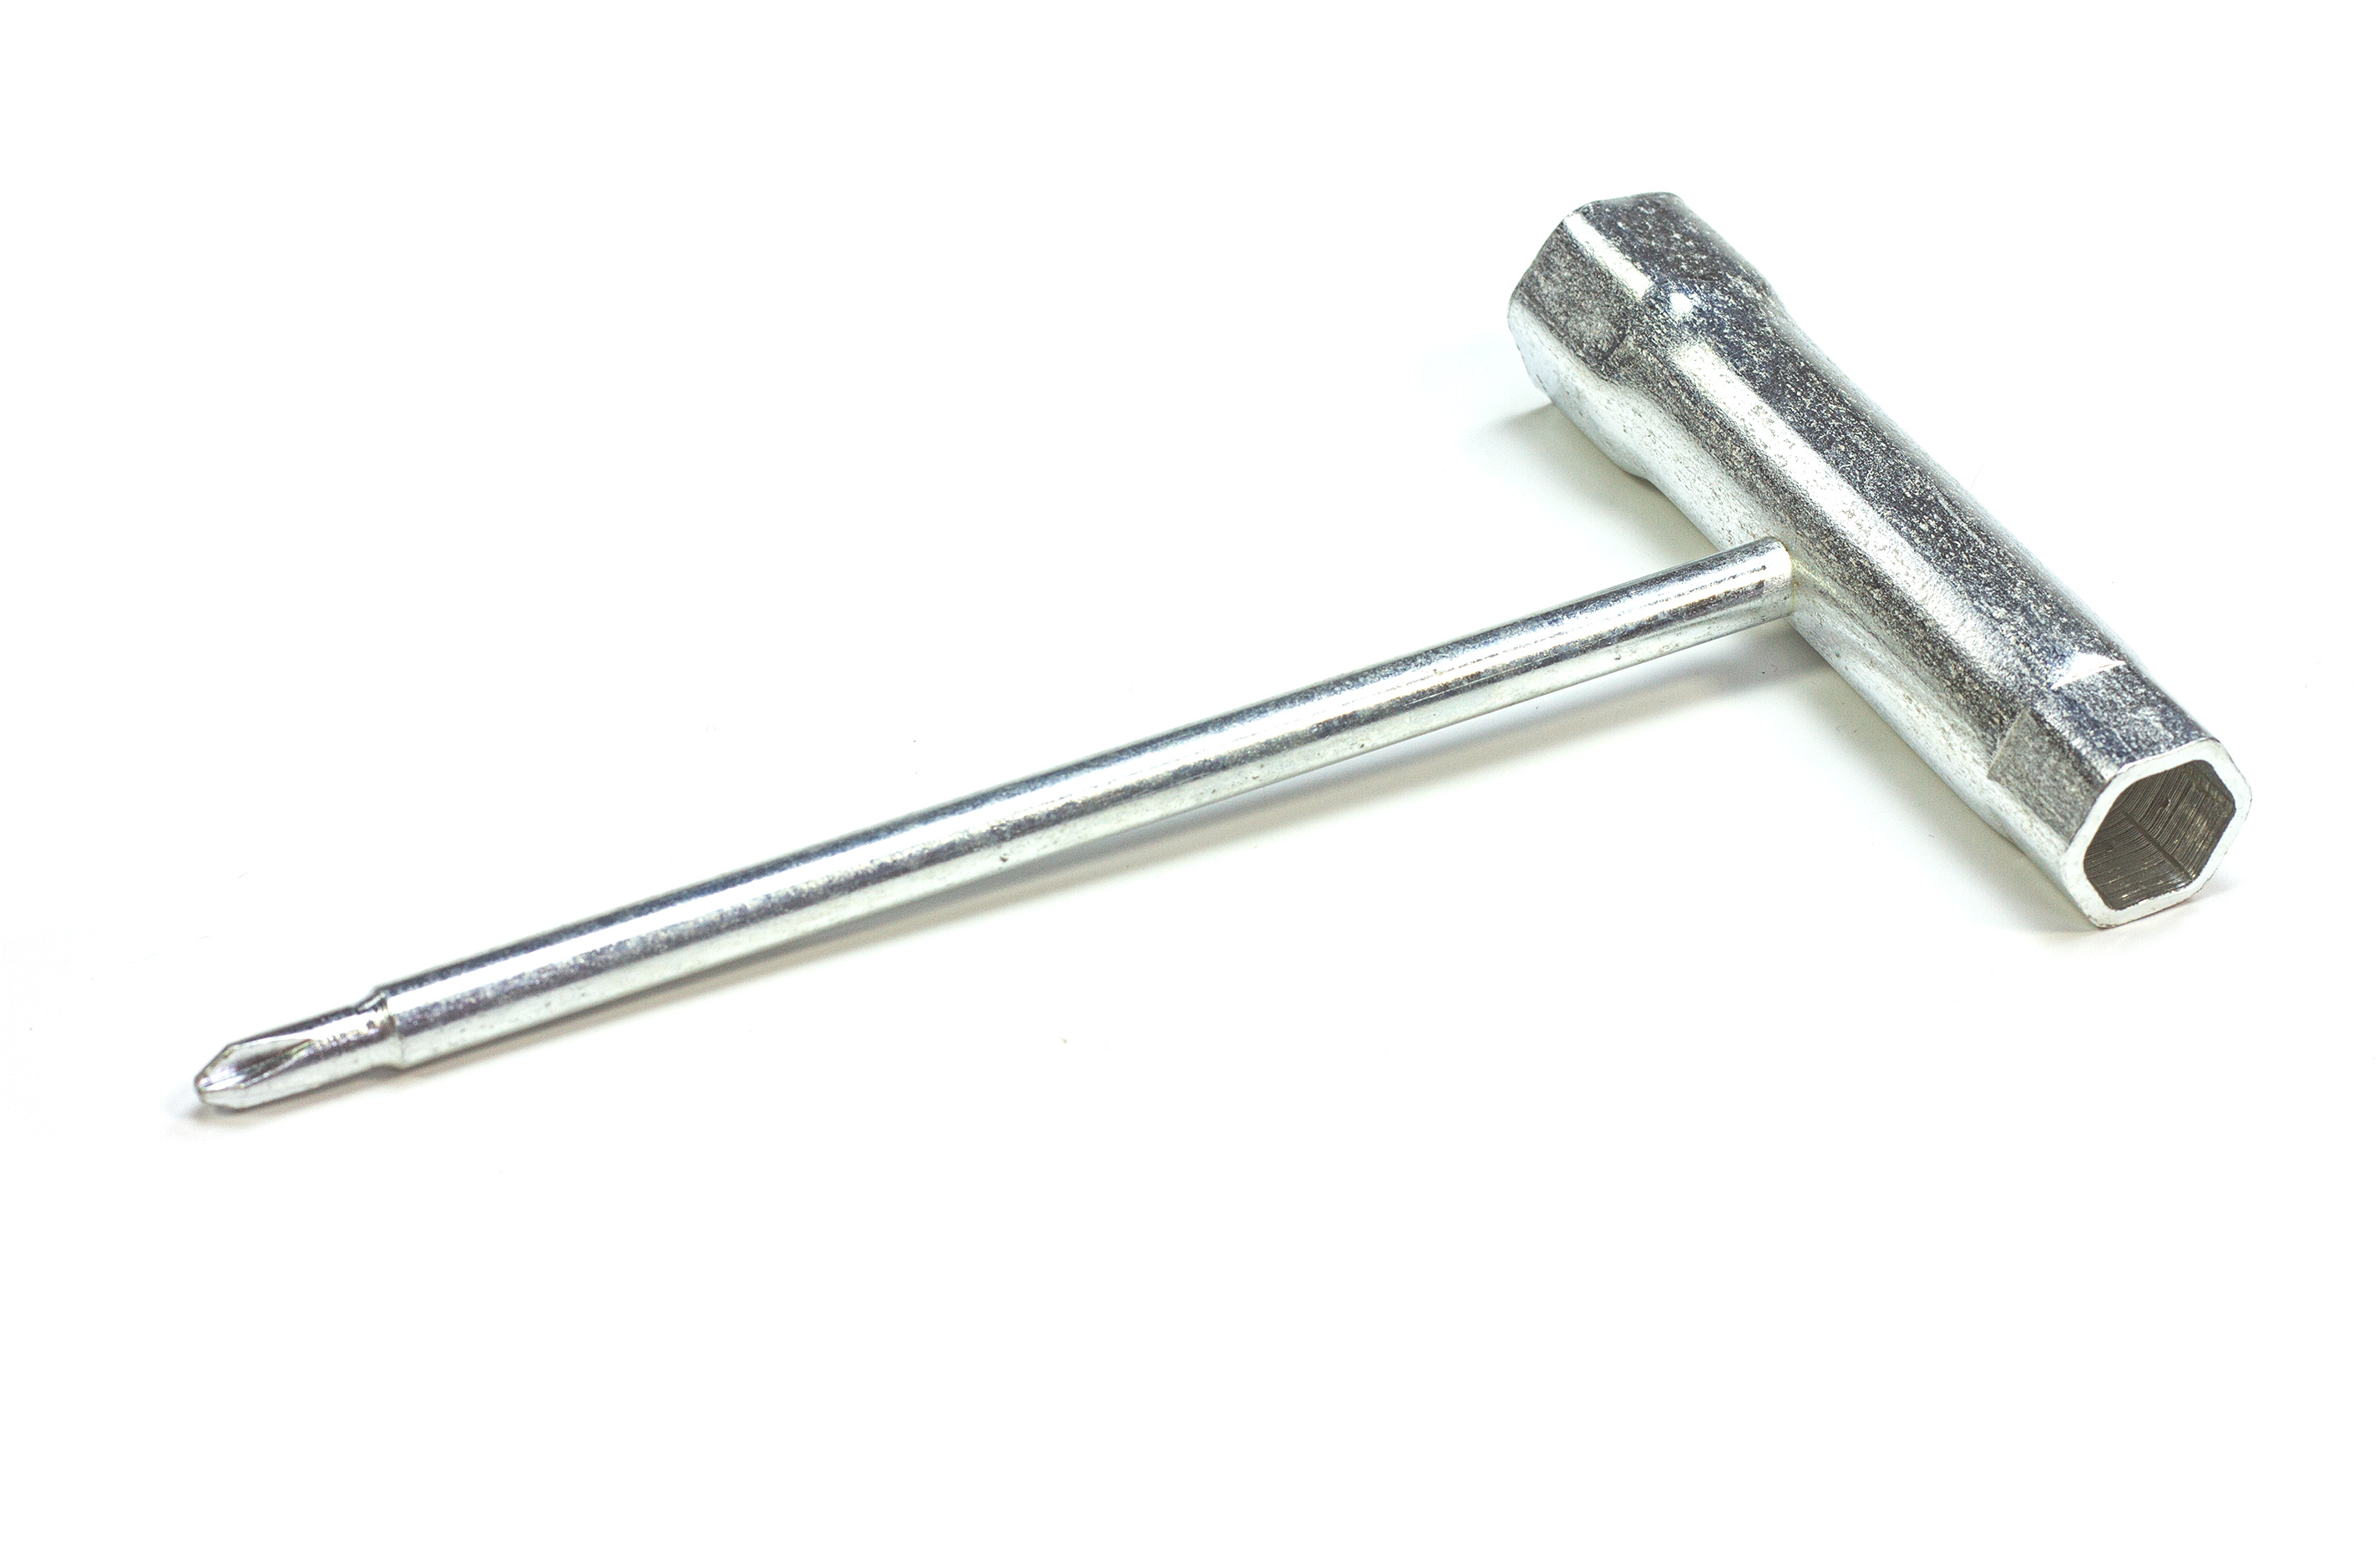 B55061 Spark plug wrench